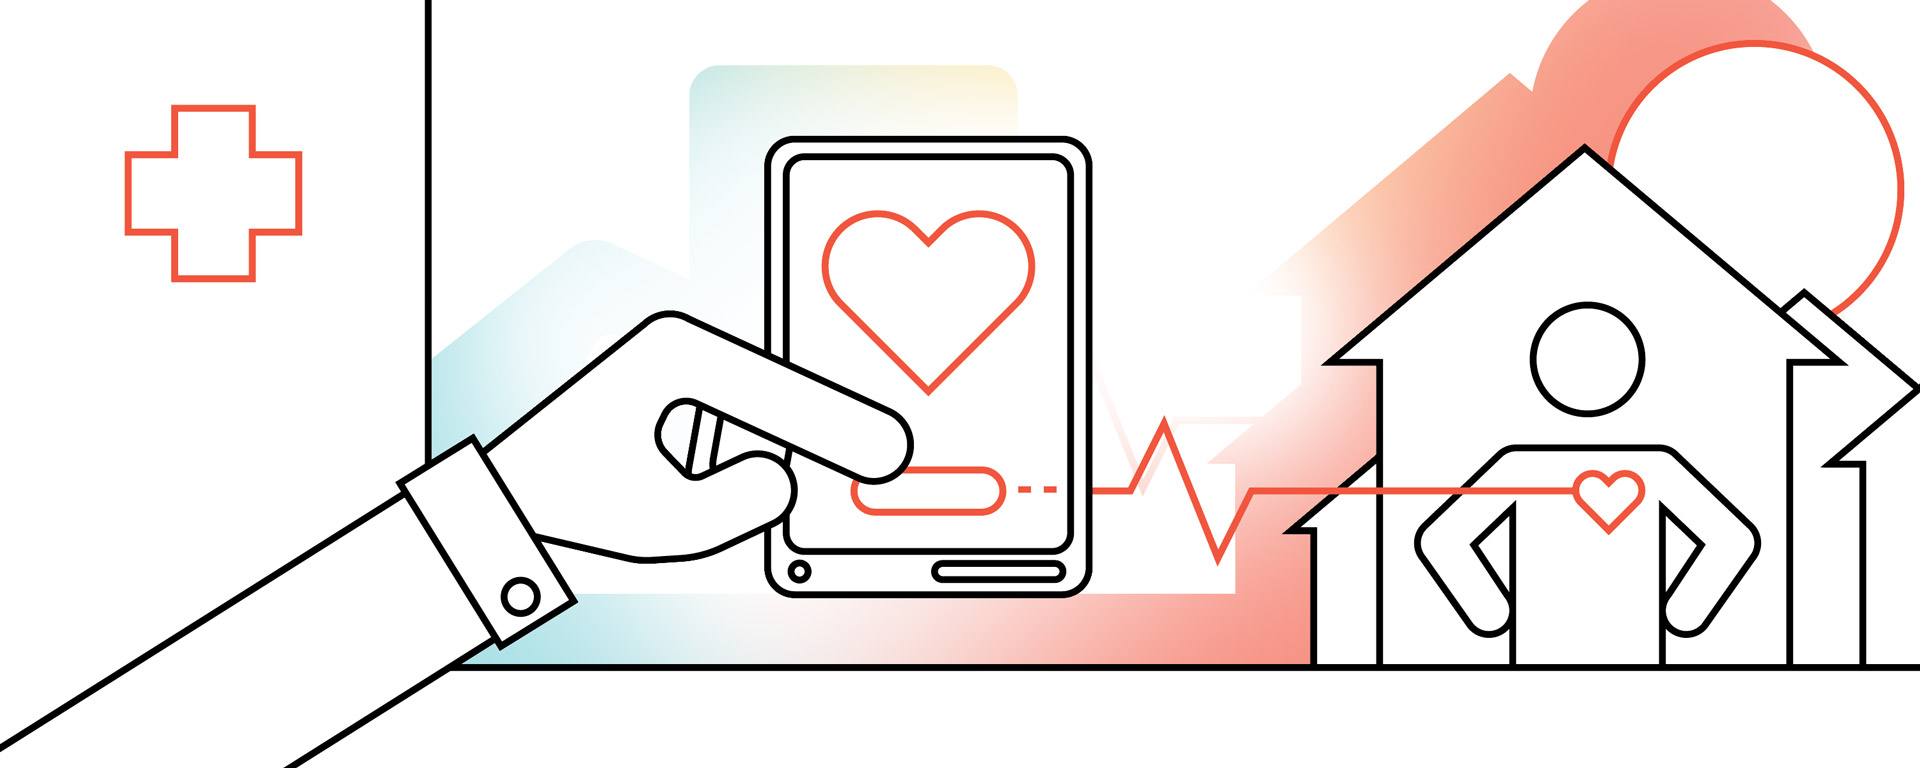 digital healthcare illustration